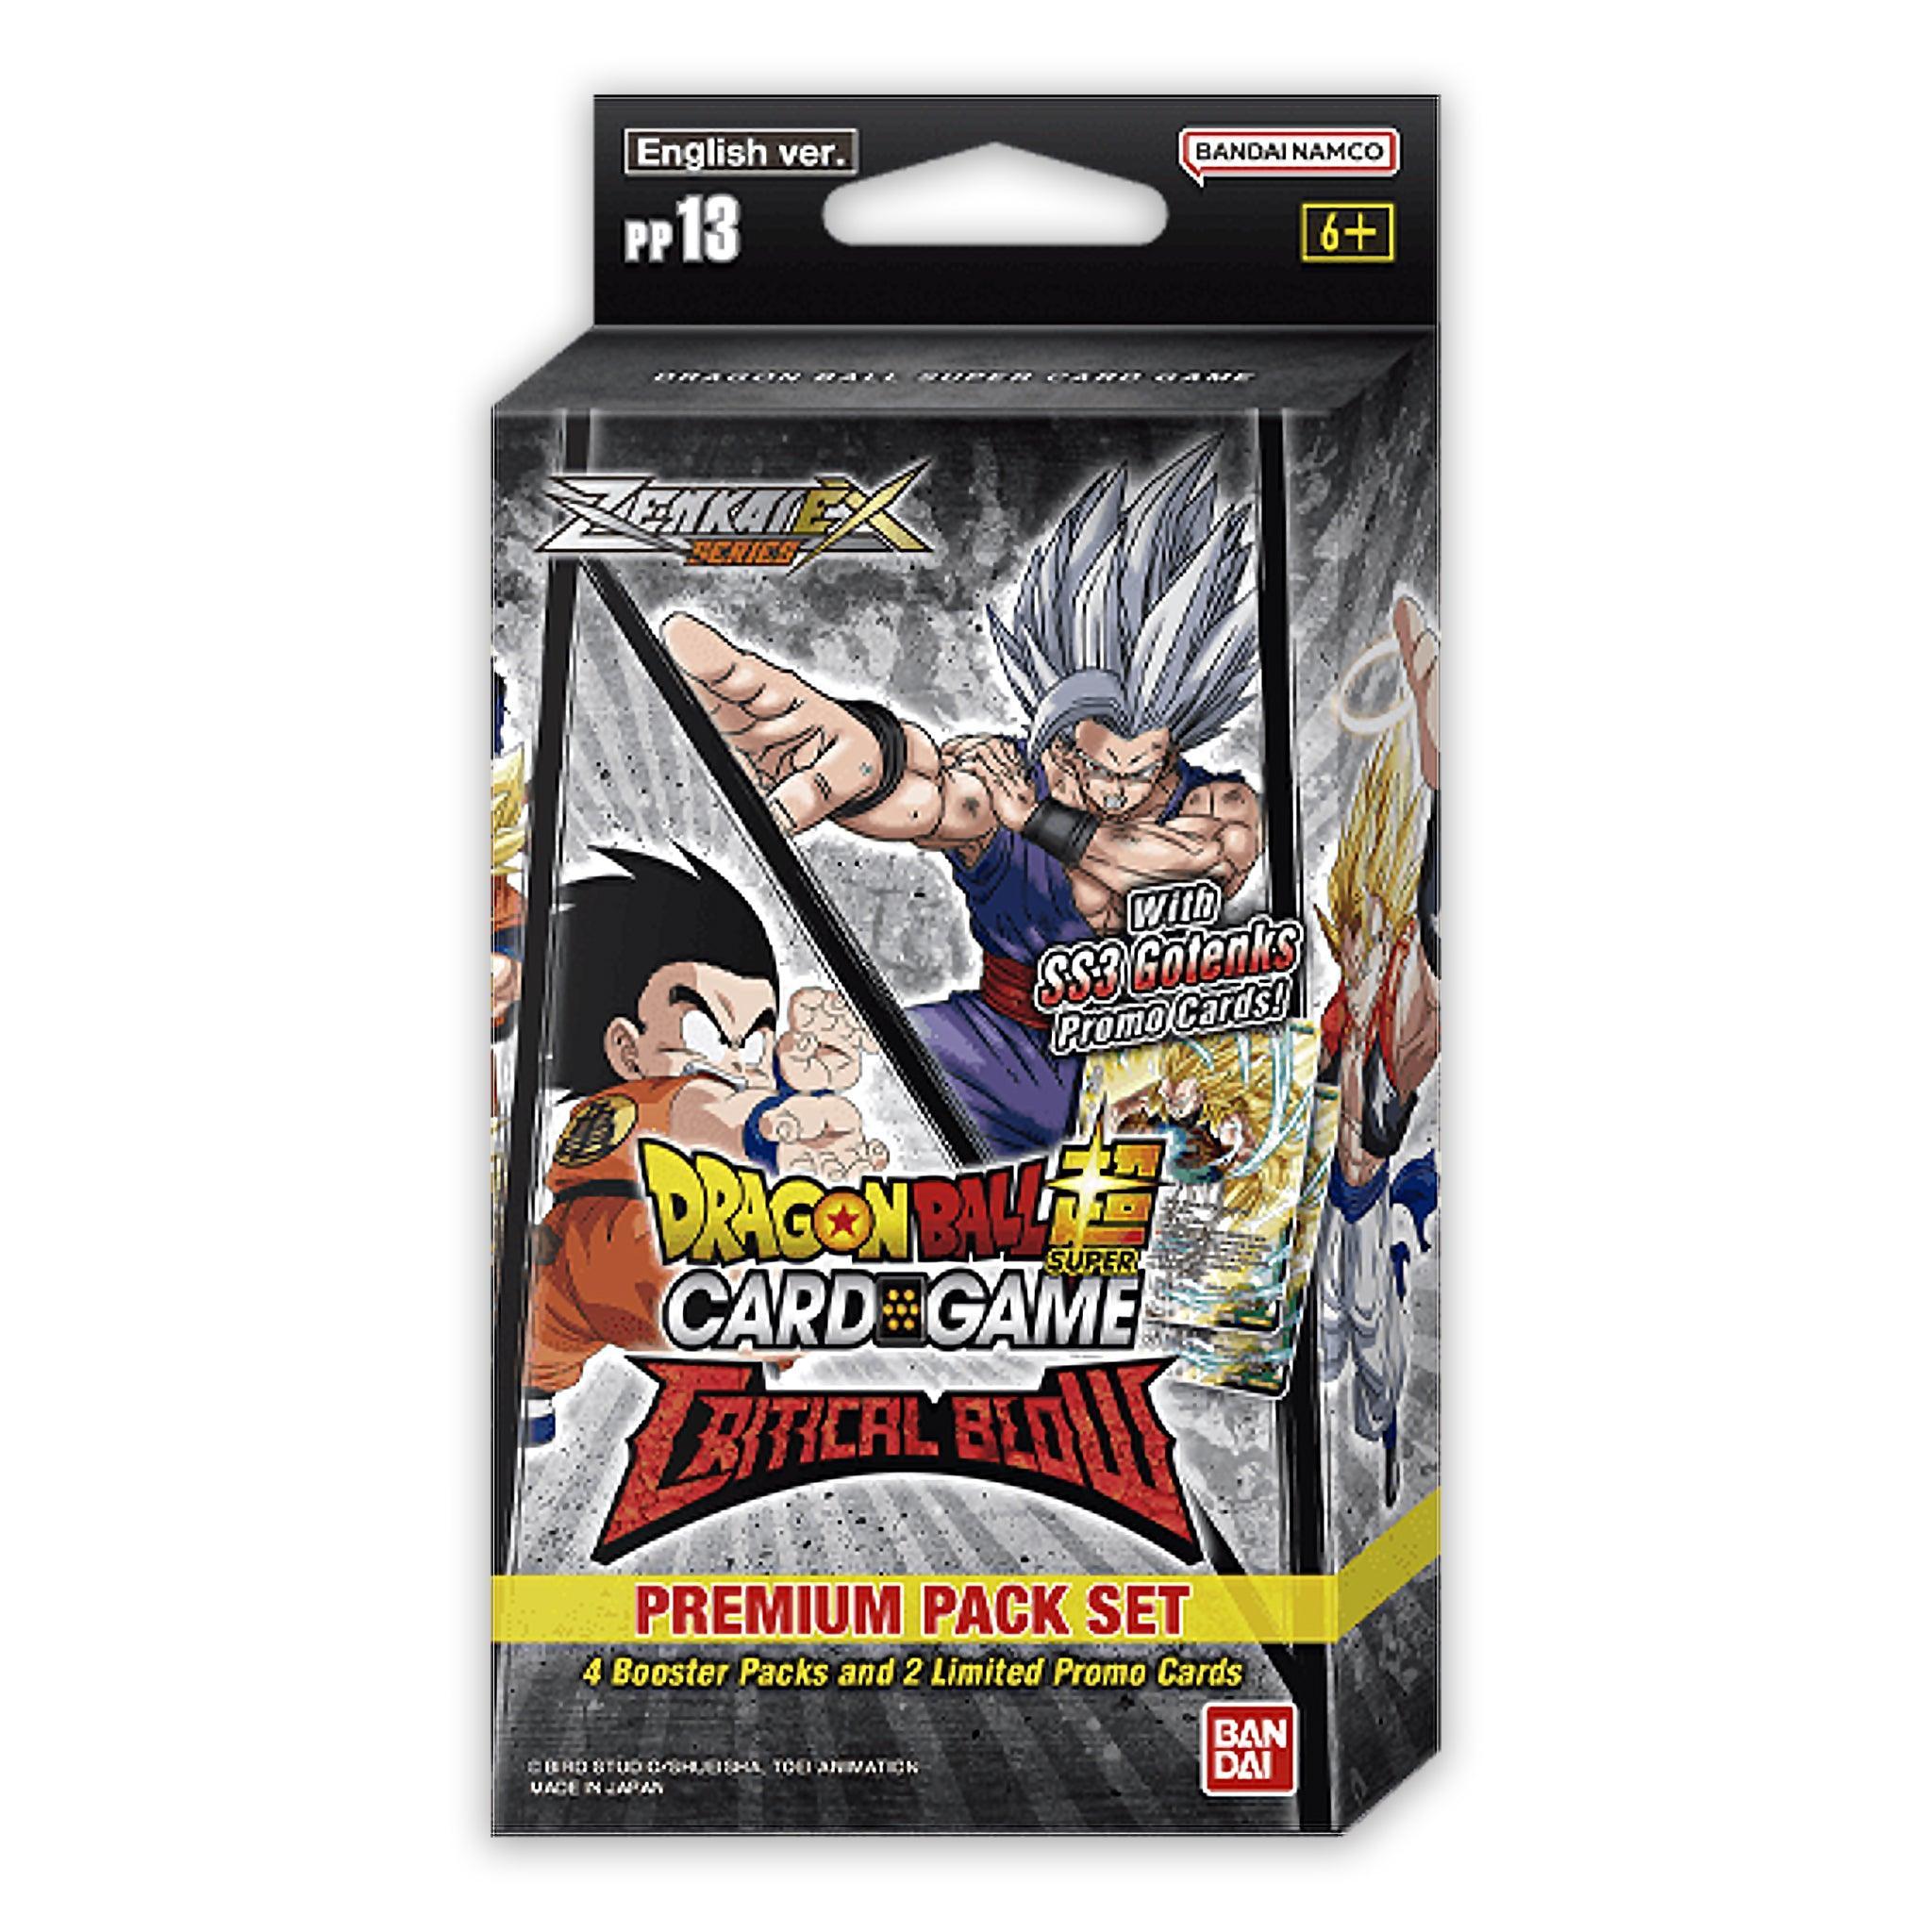 Dragon Ball Super: Zenkai Series Set 05 - Critical Blow - (PP13) Premium Pack: Set | Romulus Games